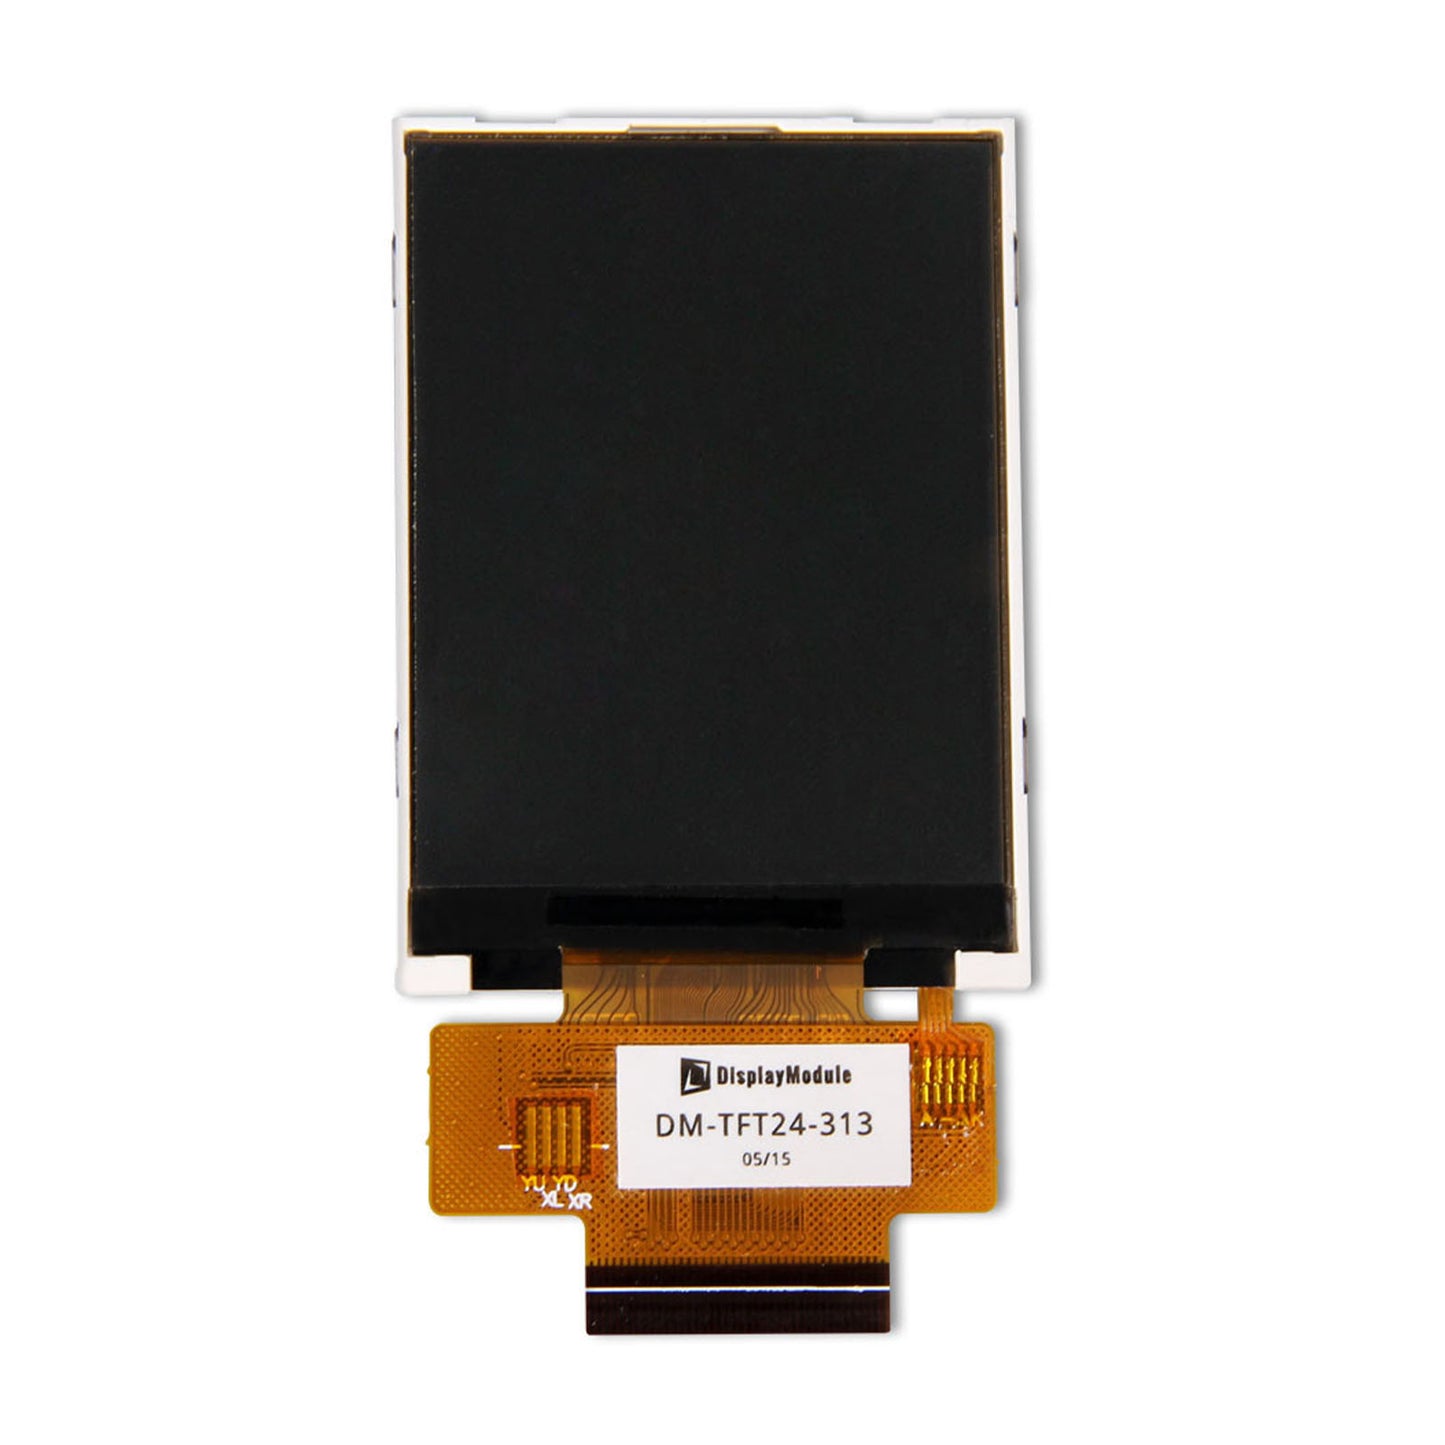 DisplayModule 2.4" 240x320 TFT LCD Display Panel (ILI9341) - MCU